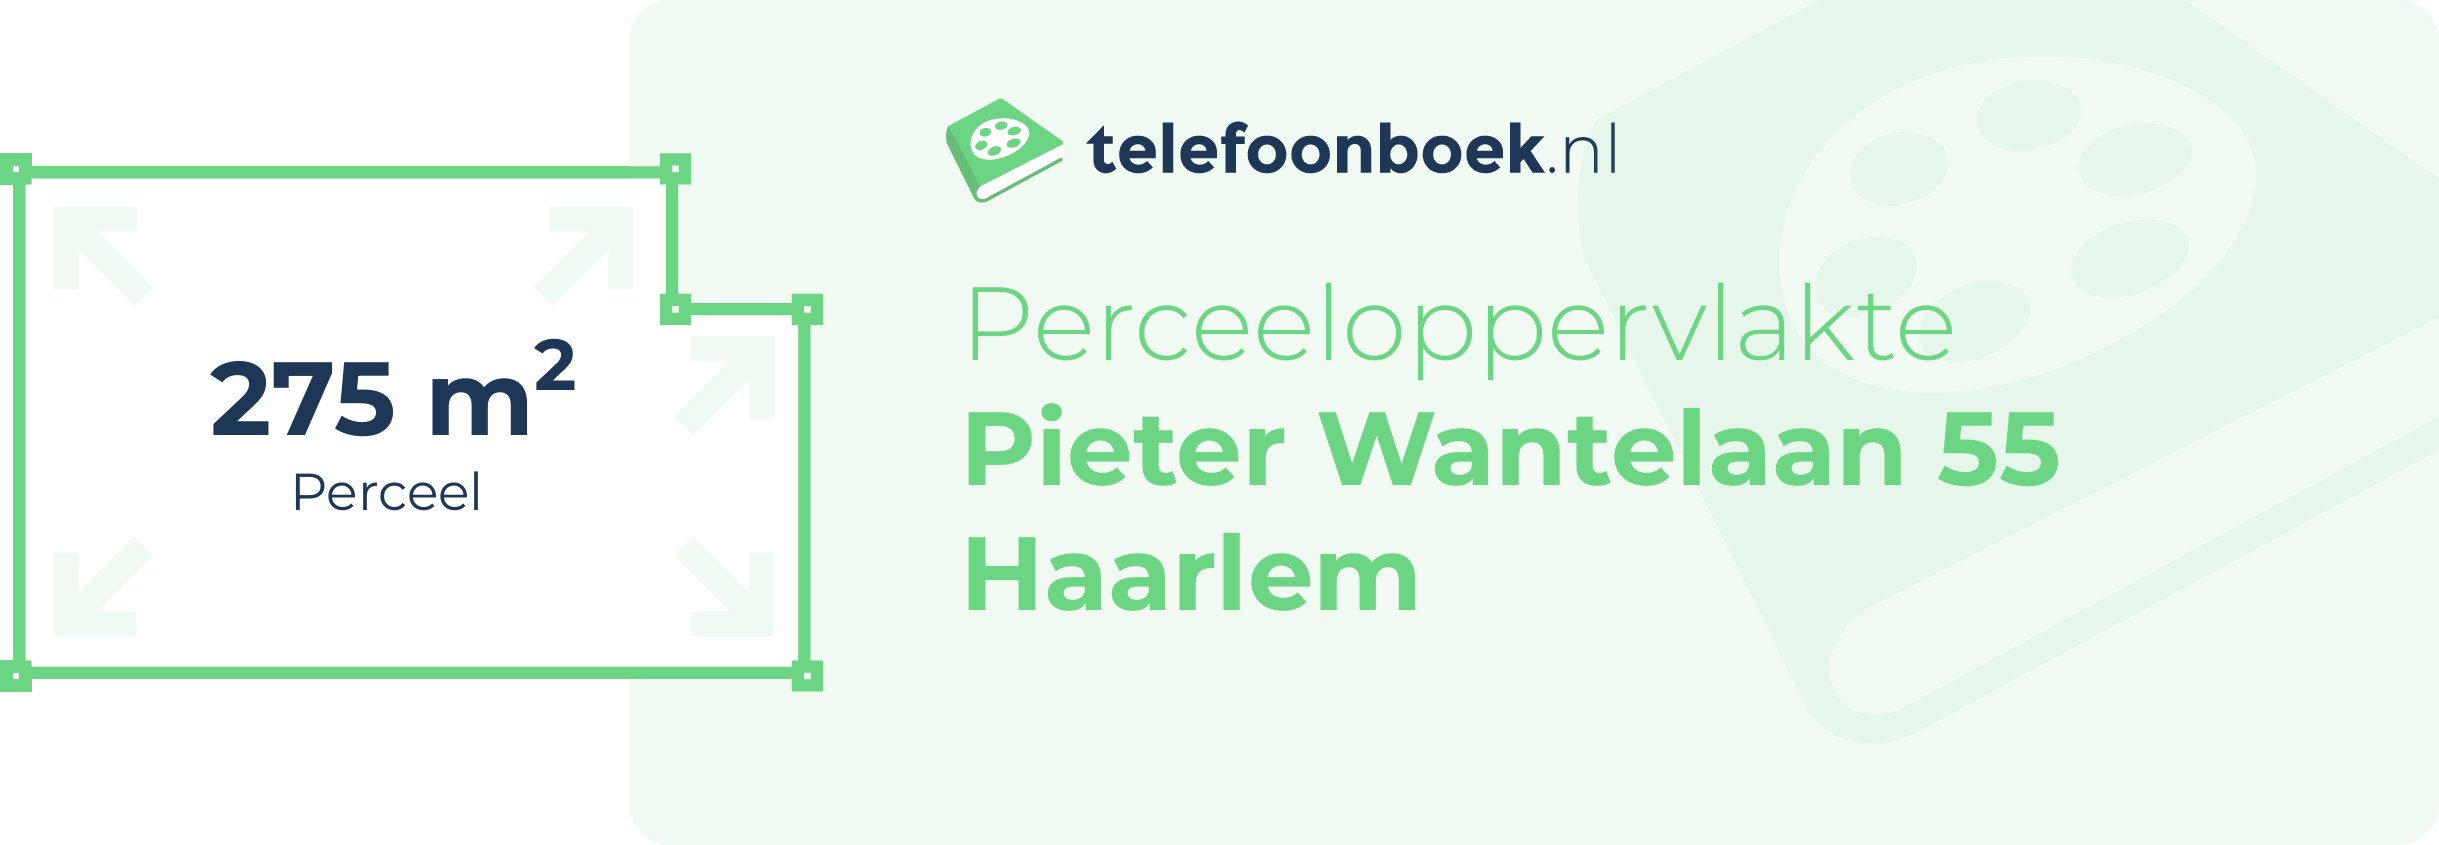 Perceeloppervlakte Pieter Wantelaan 55 Haarlem